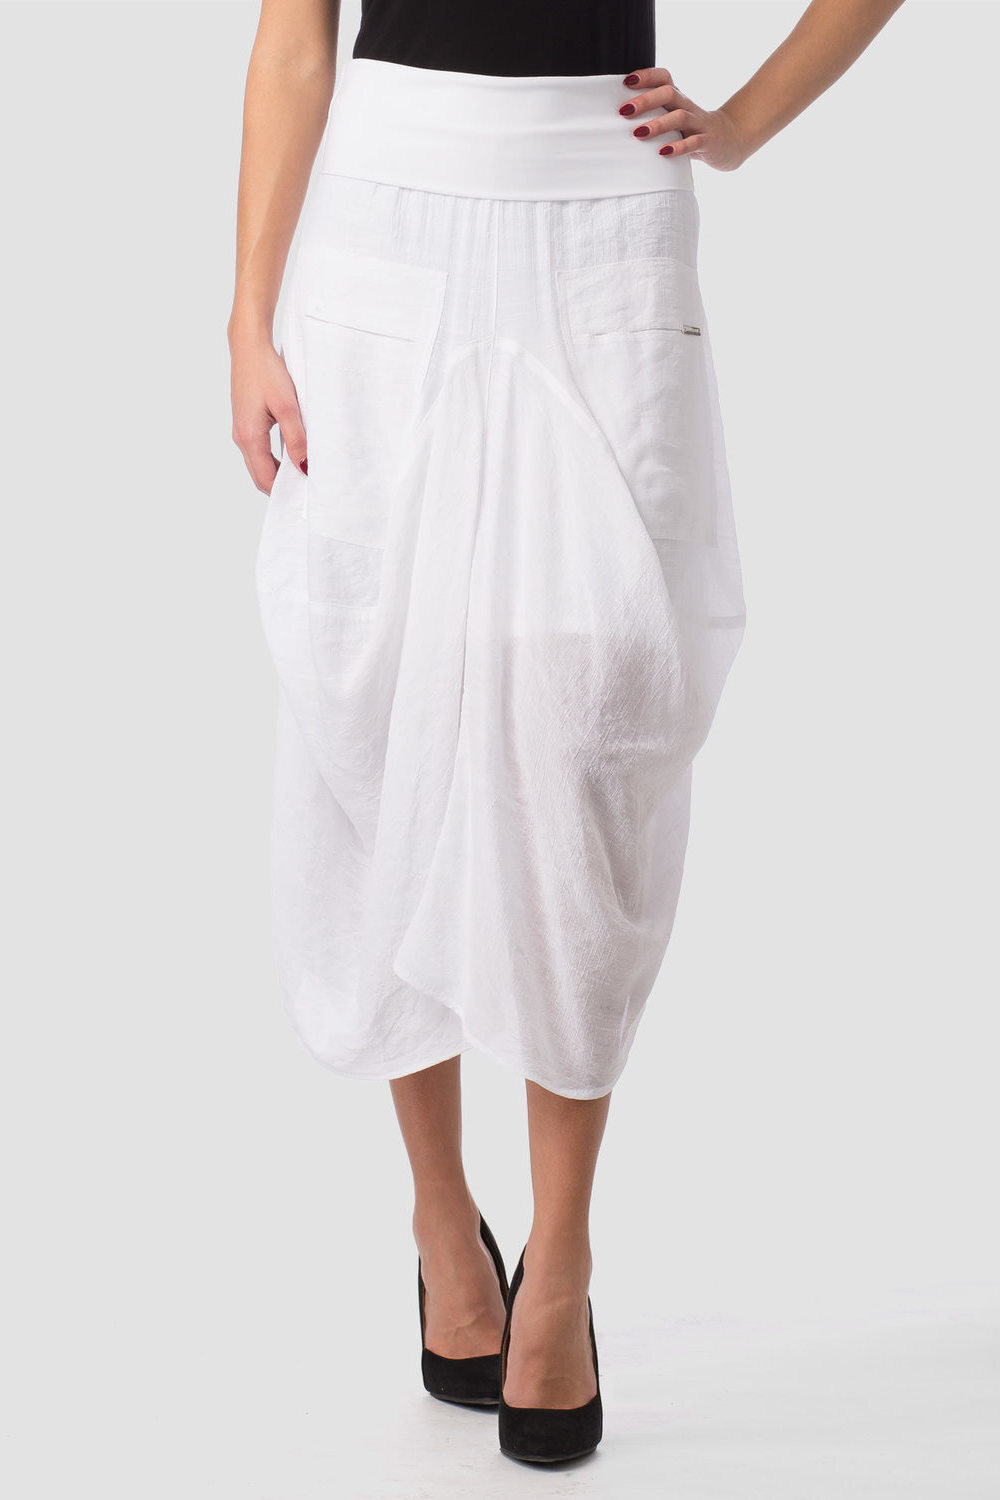 Joseph Ribkoff skirt style 172448. White